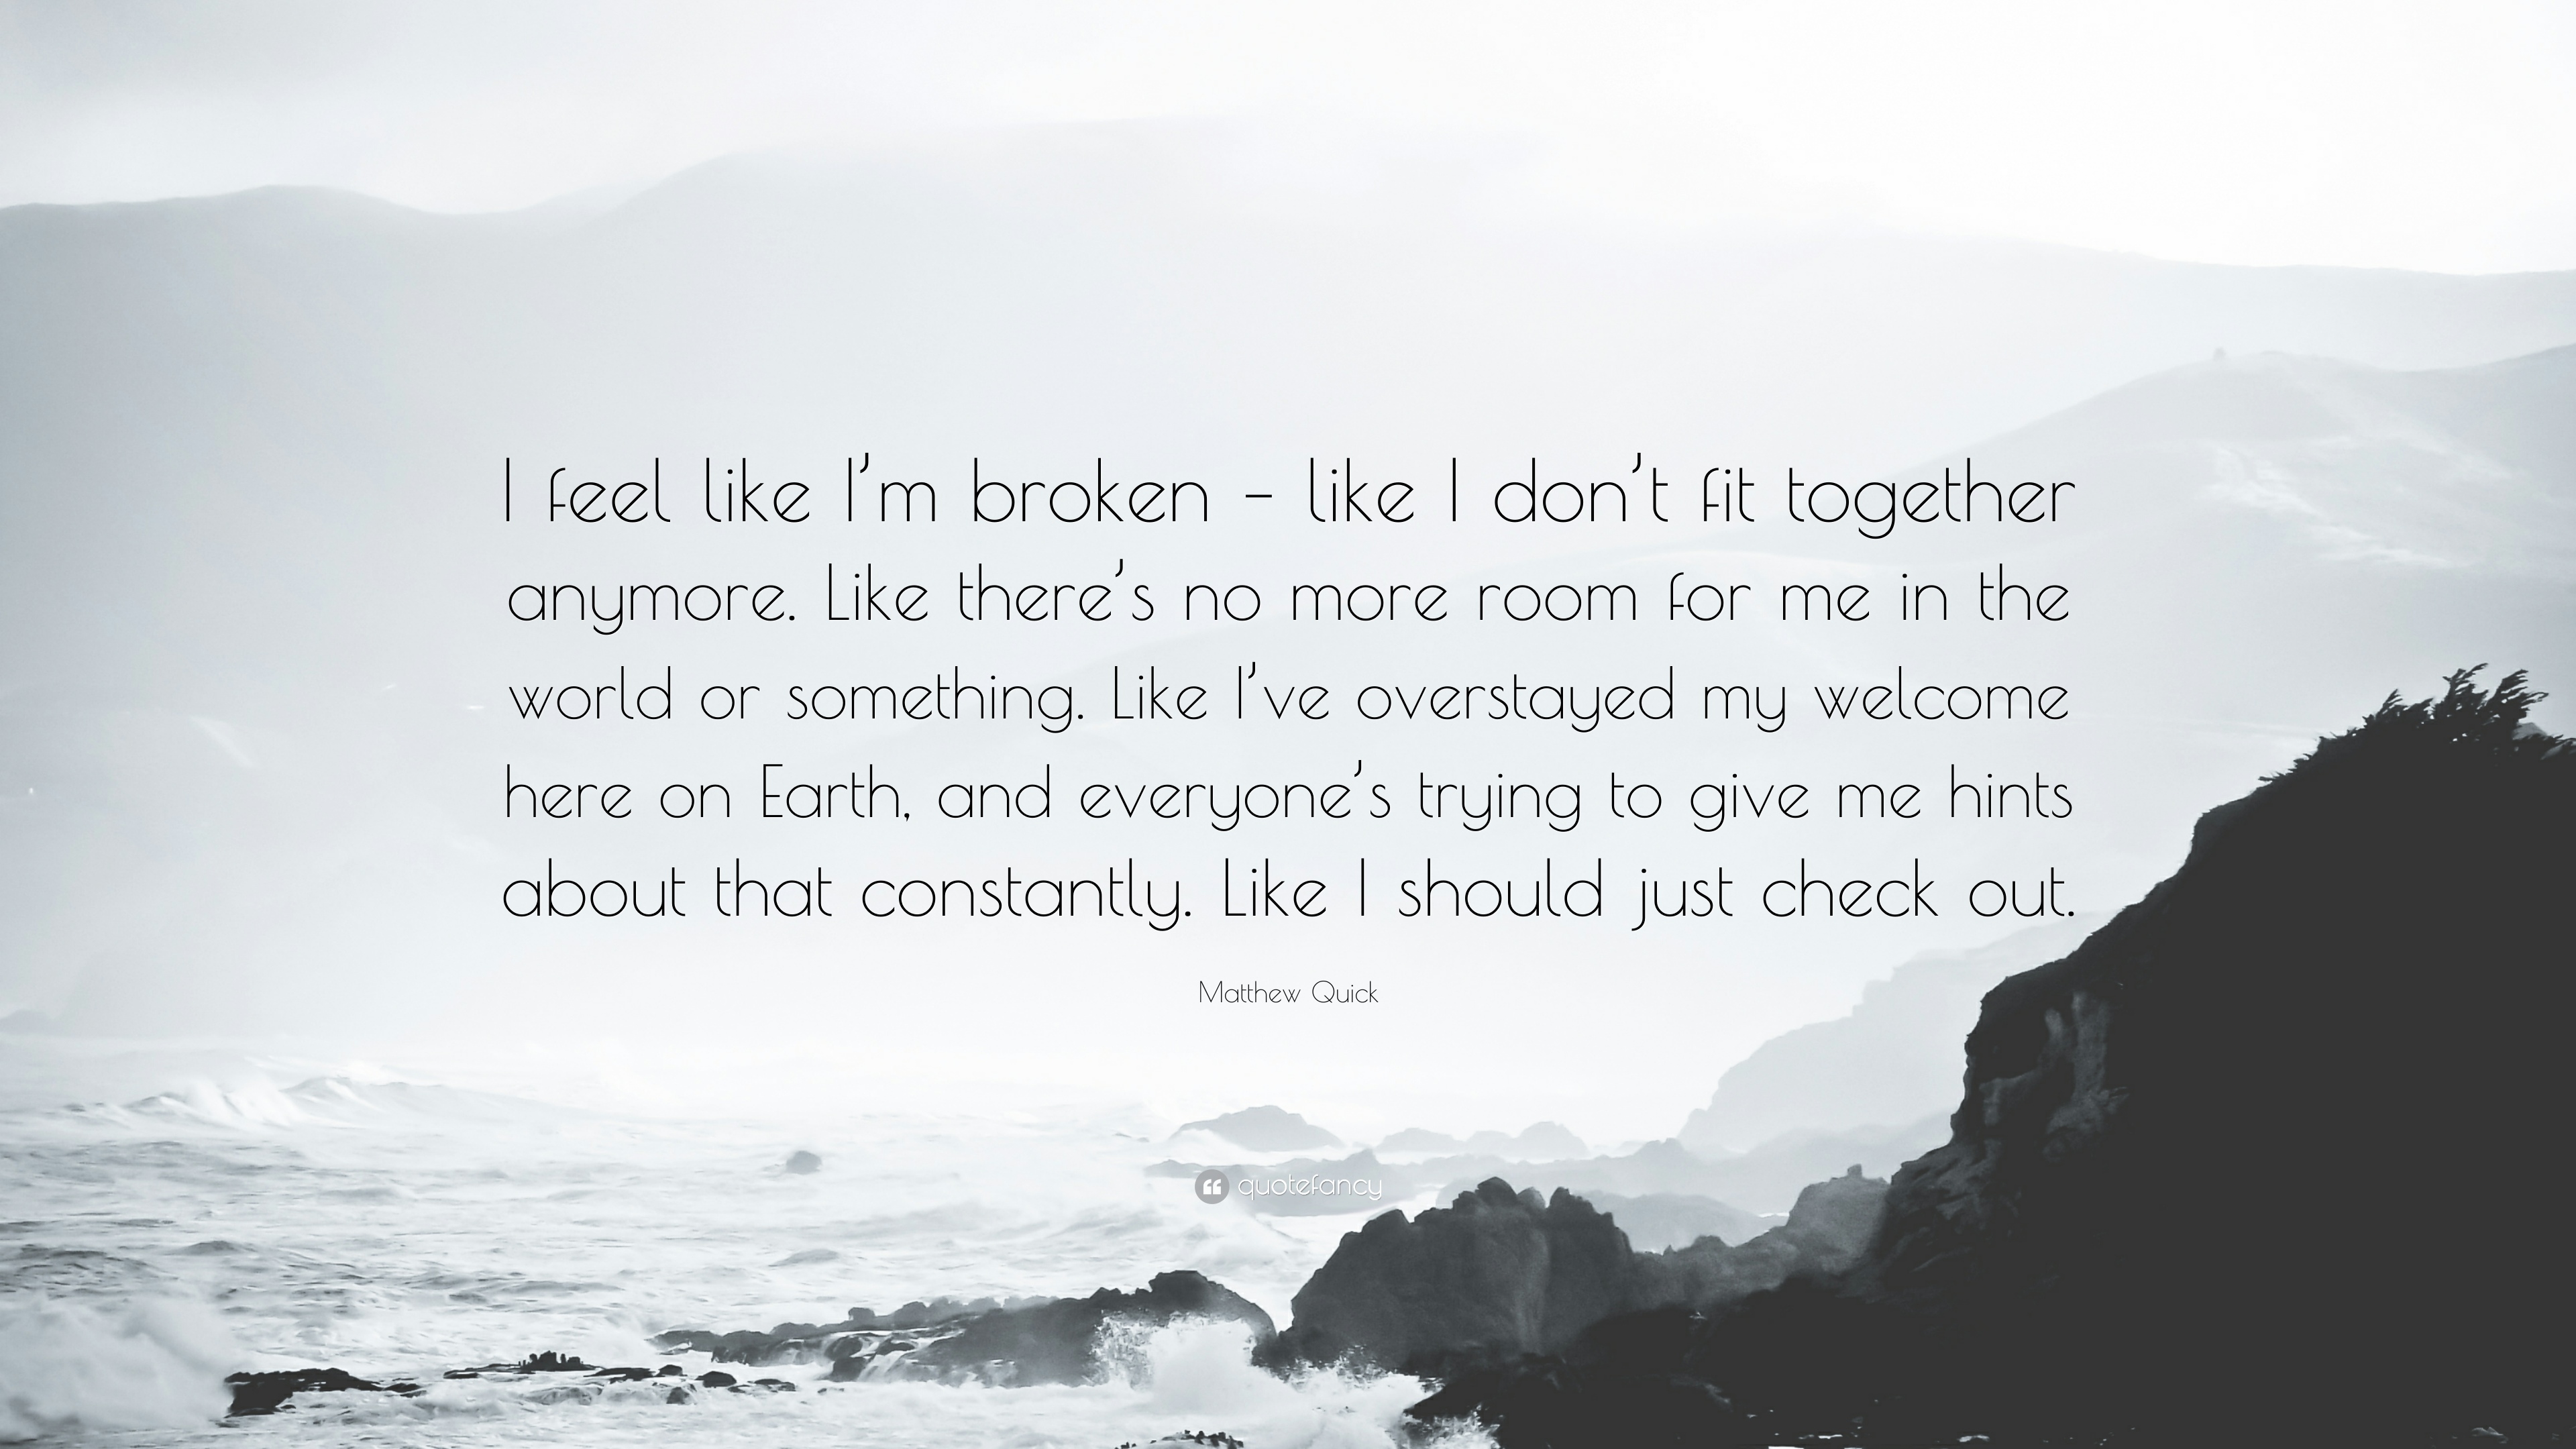 Matthew Quick Quote: “I feel like I'm broken